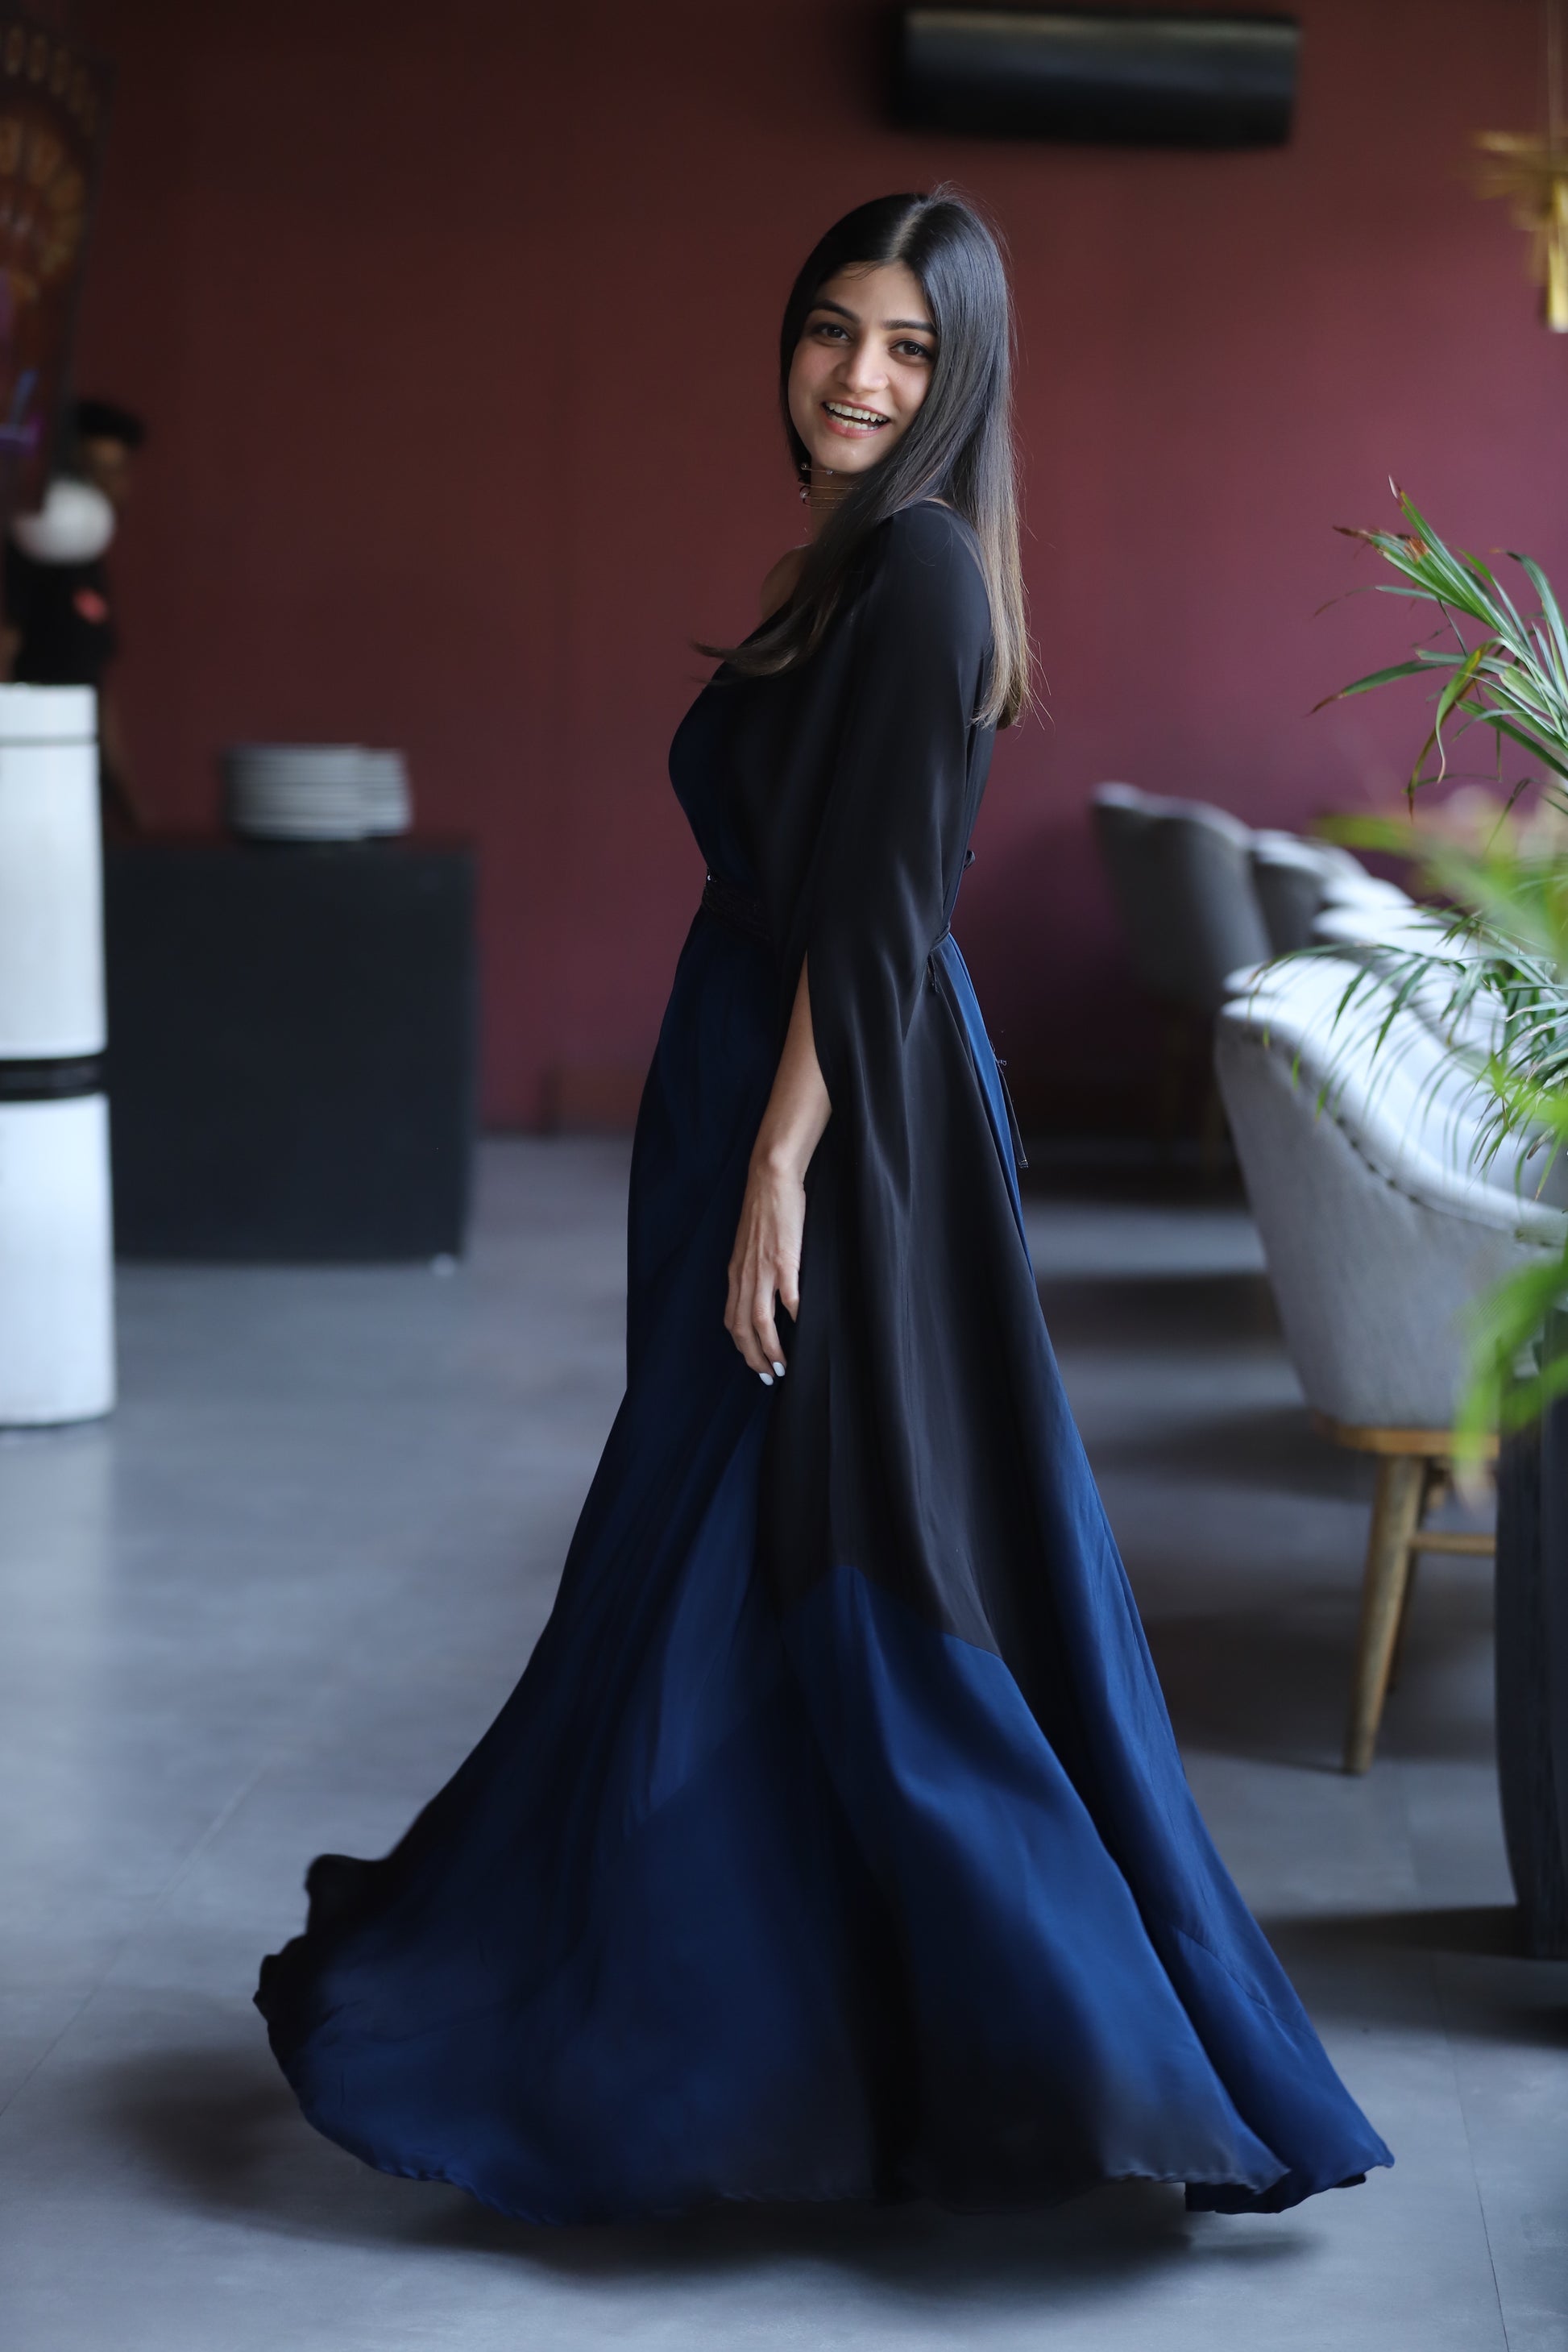 Indigo Blue Floral Print One Shoulder Dress With Belt – Nikita Mhaisalkar